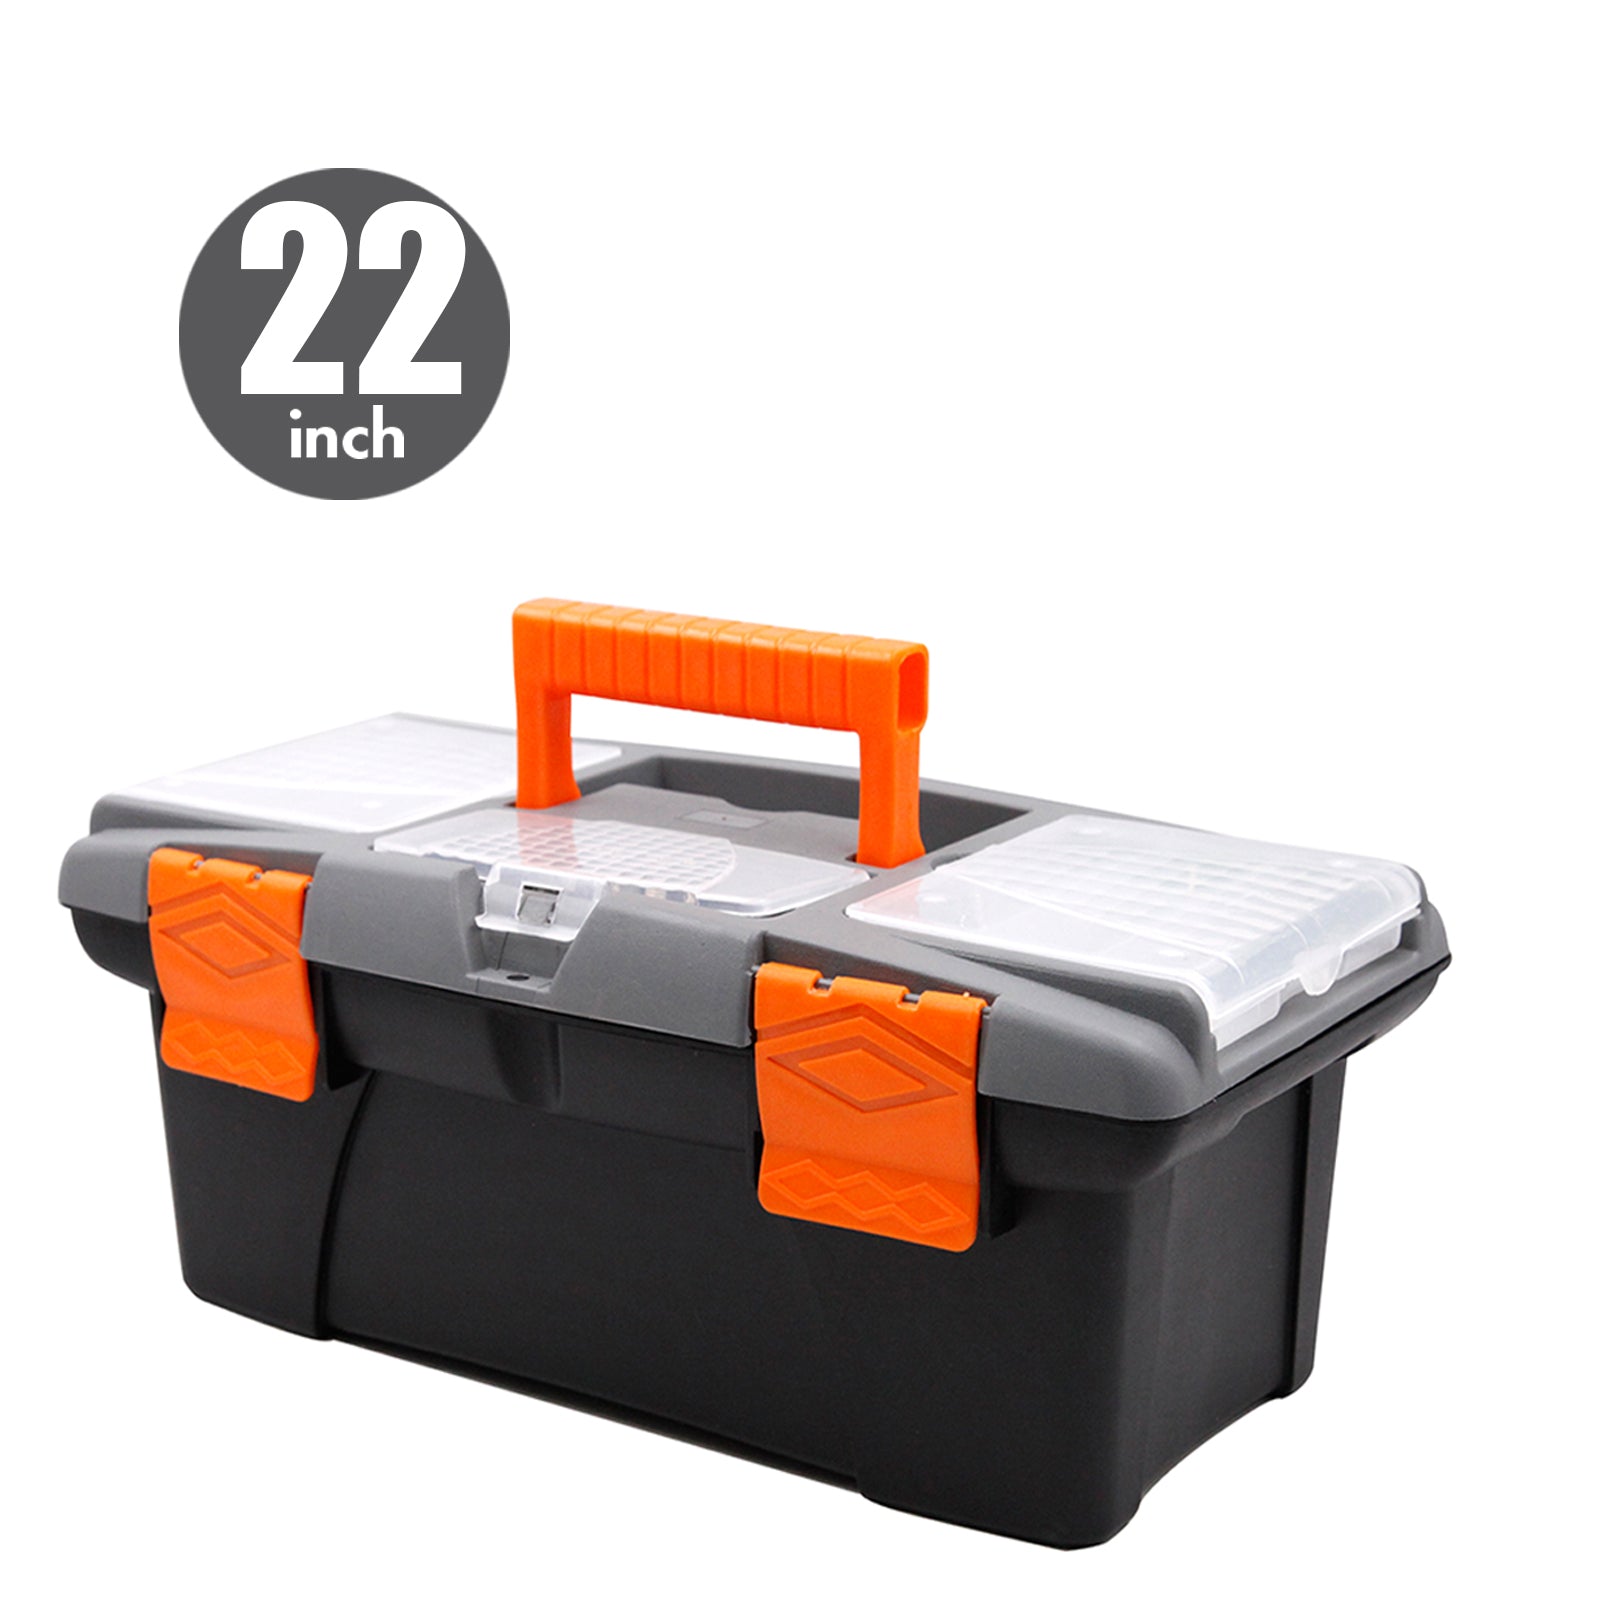 HOUZE - FINDER - Plastic Tool box (22 Inch)